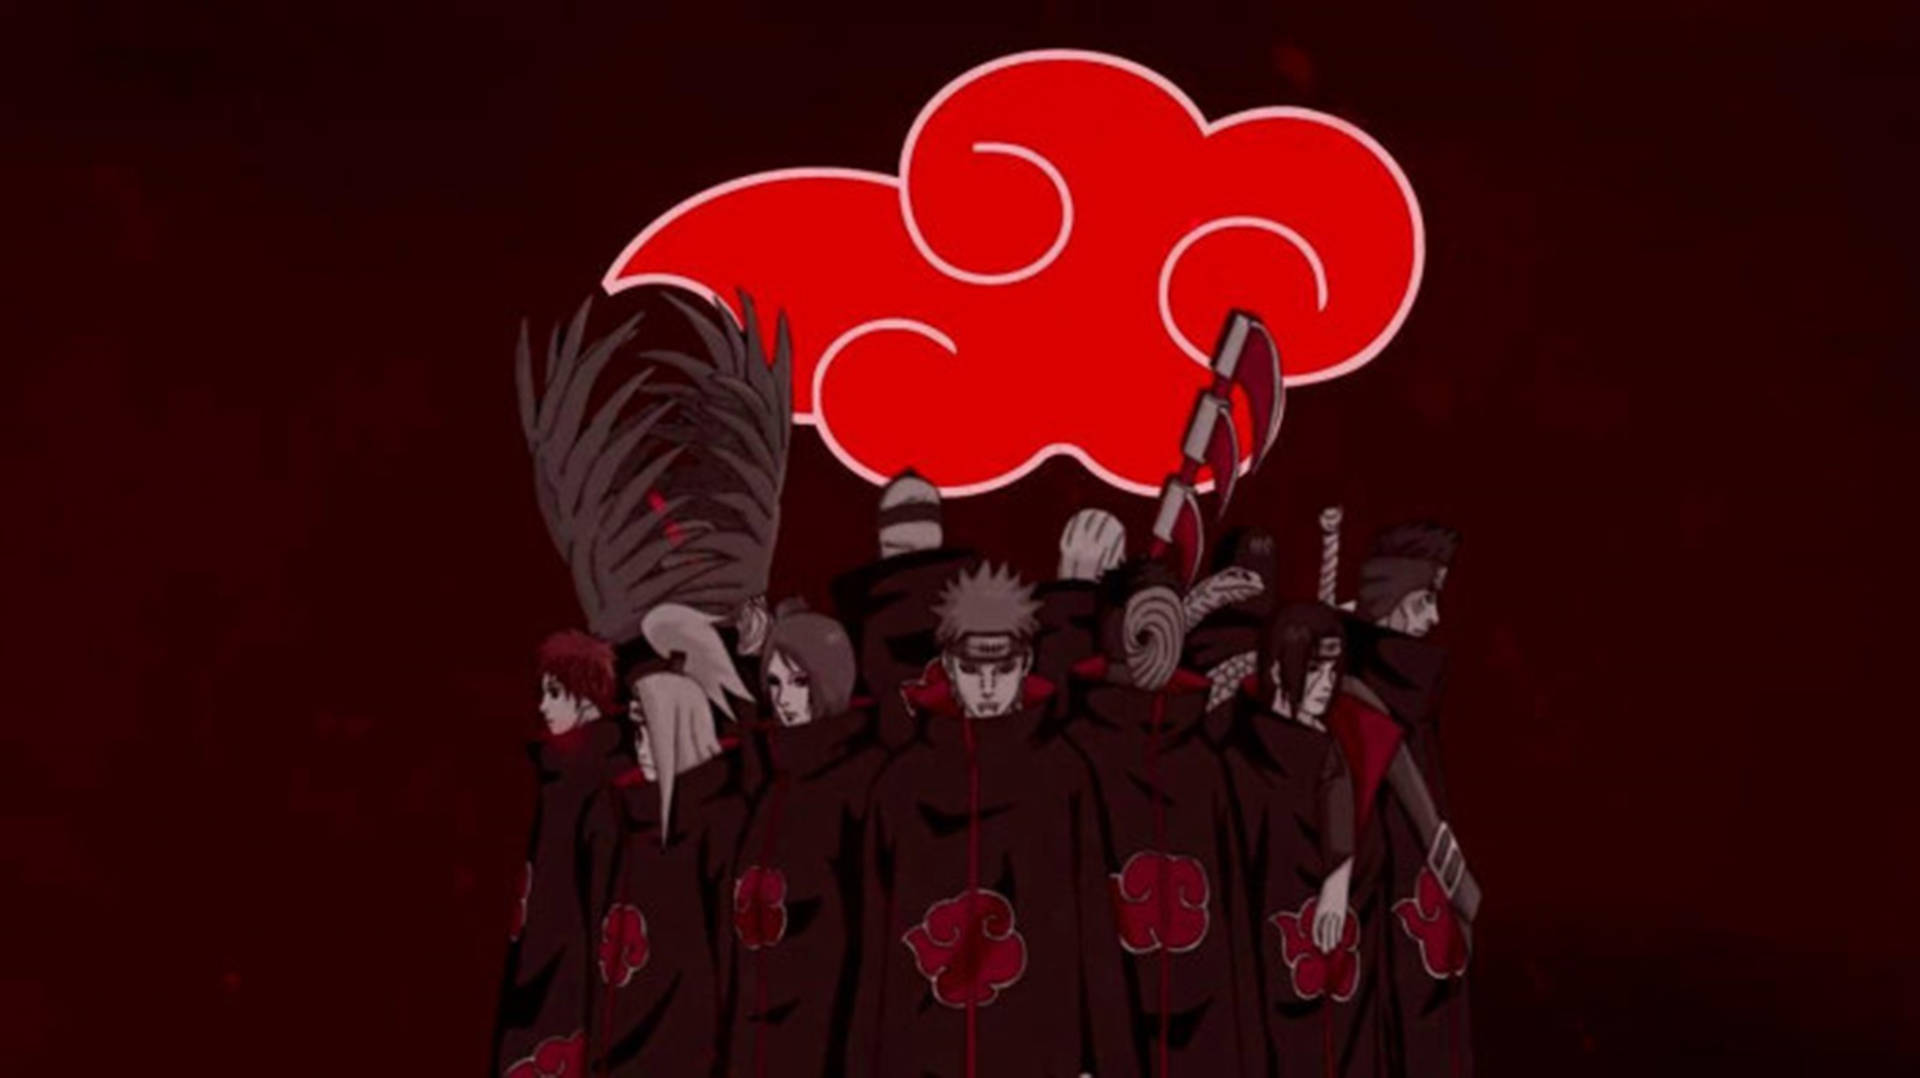 Caption: Fierce Akatsuki Logo With Shinobi Ninjas In Battle Stance